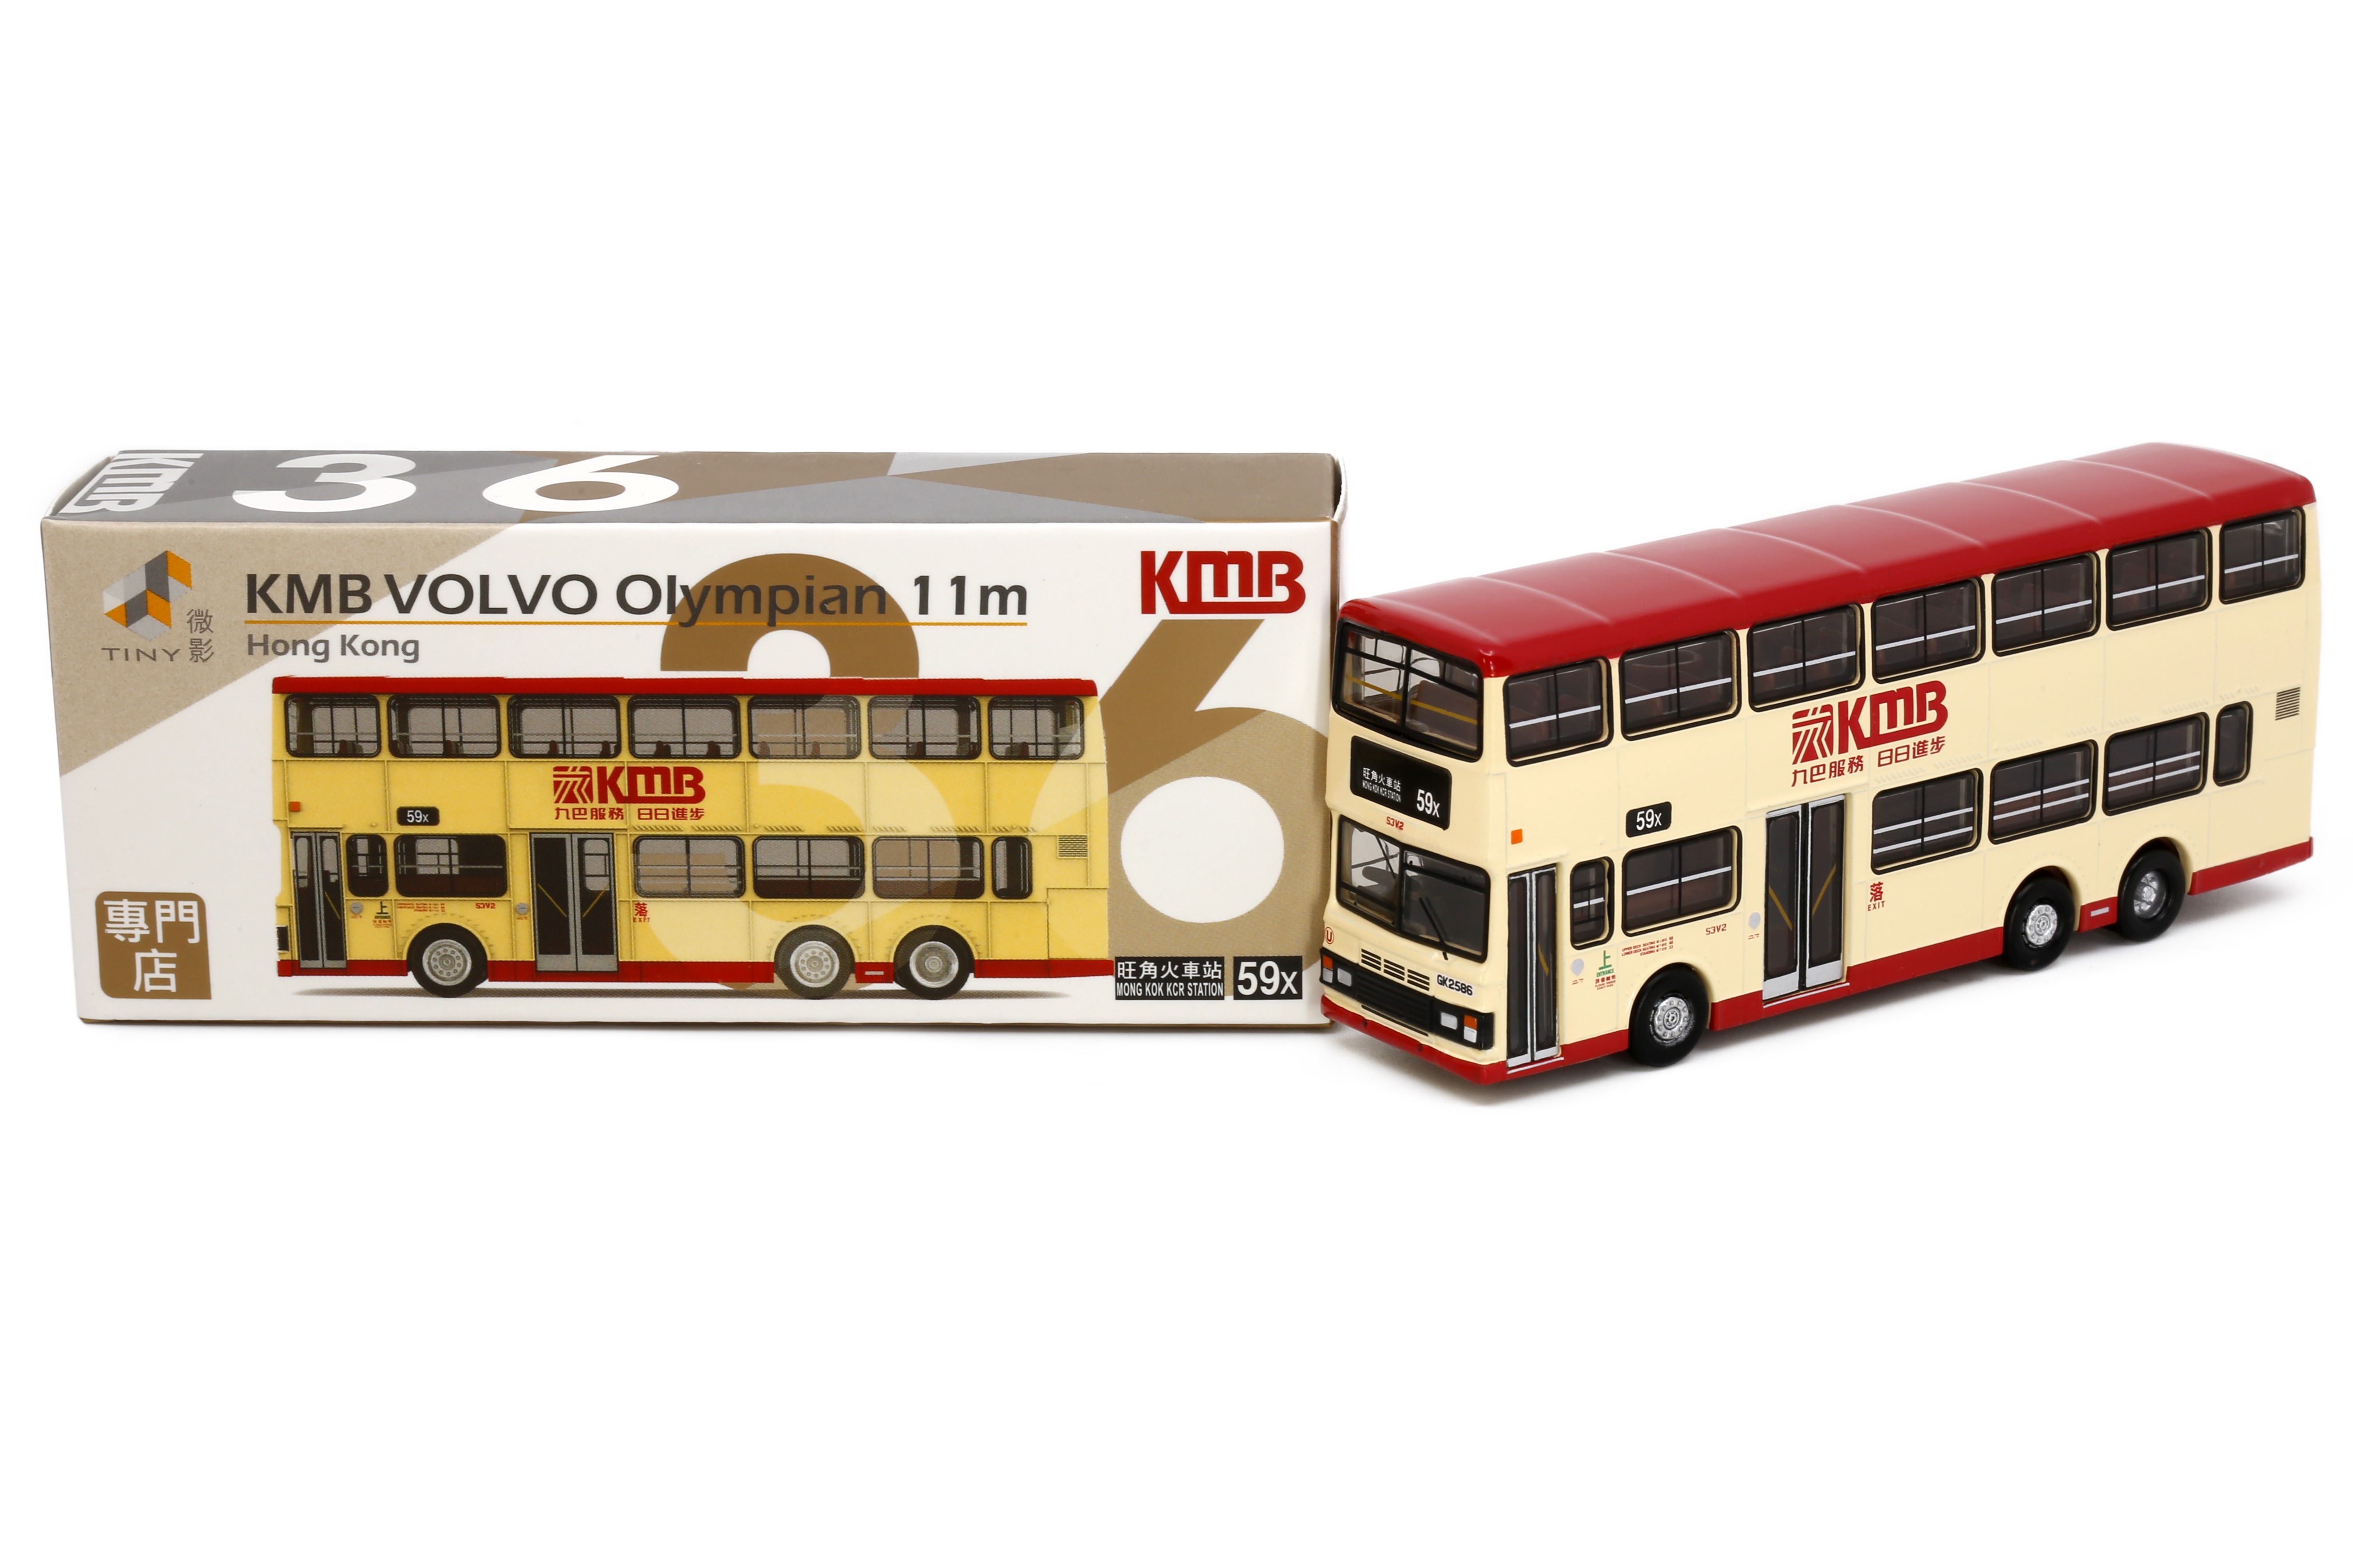 Tiny City KMB36 Die-cast Model Car - KMB VOLVO Olympian 11m (59X) - Tiny 微影